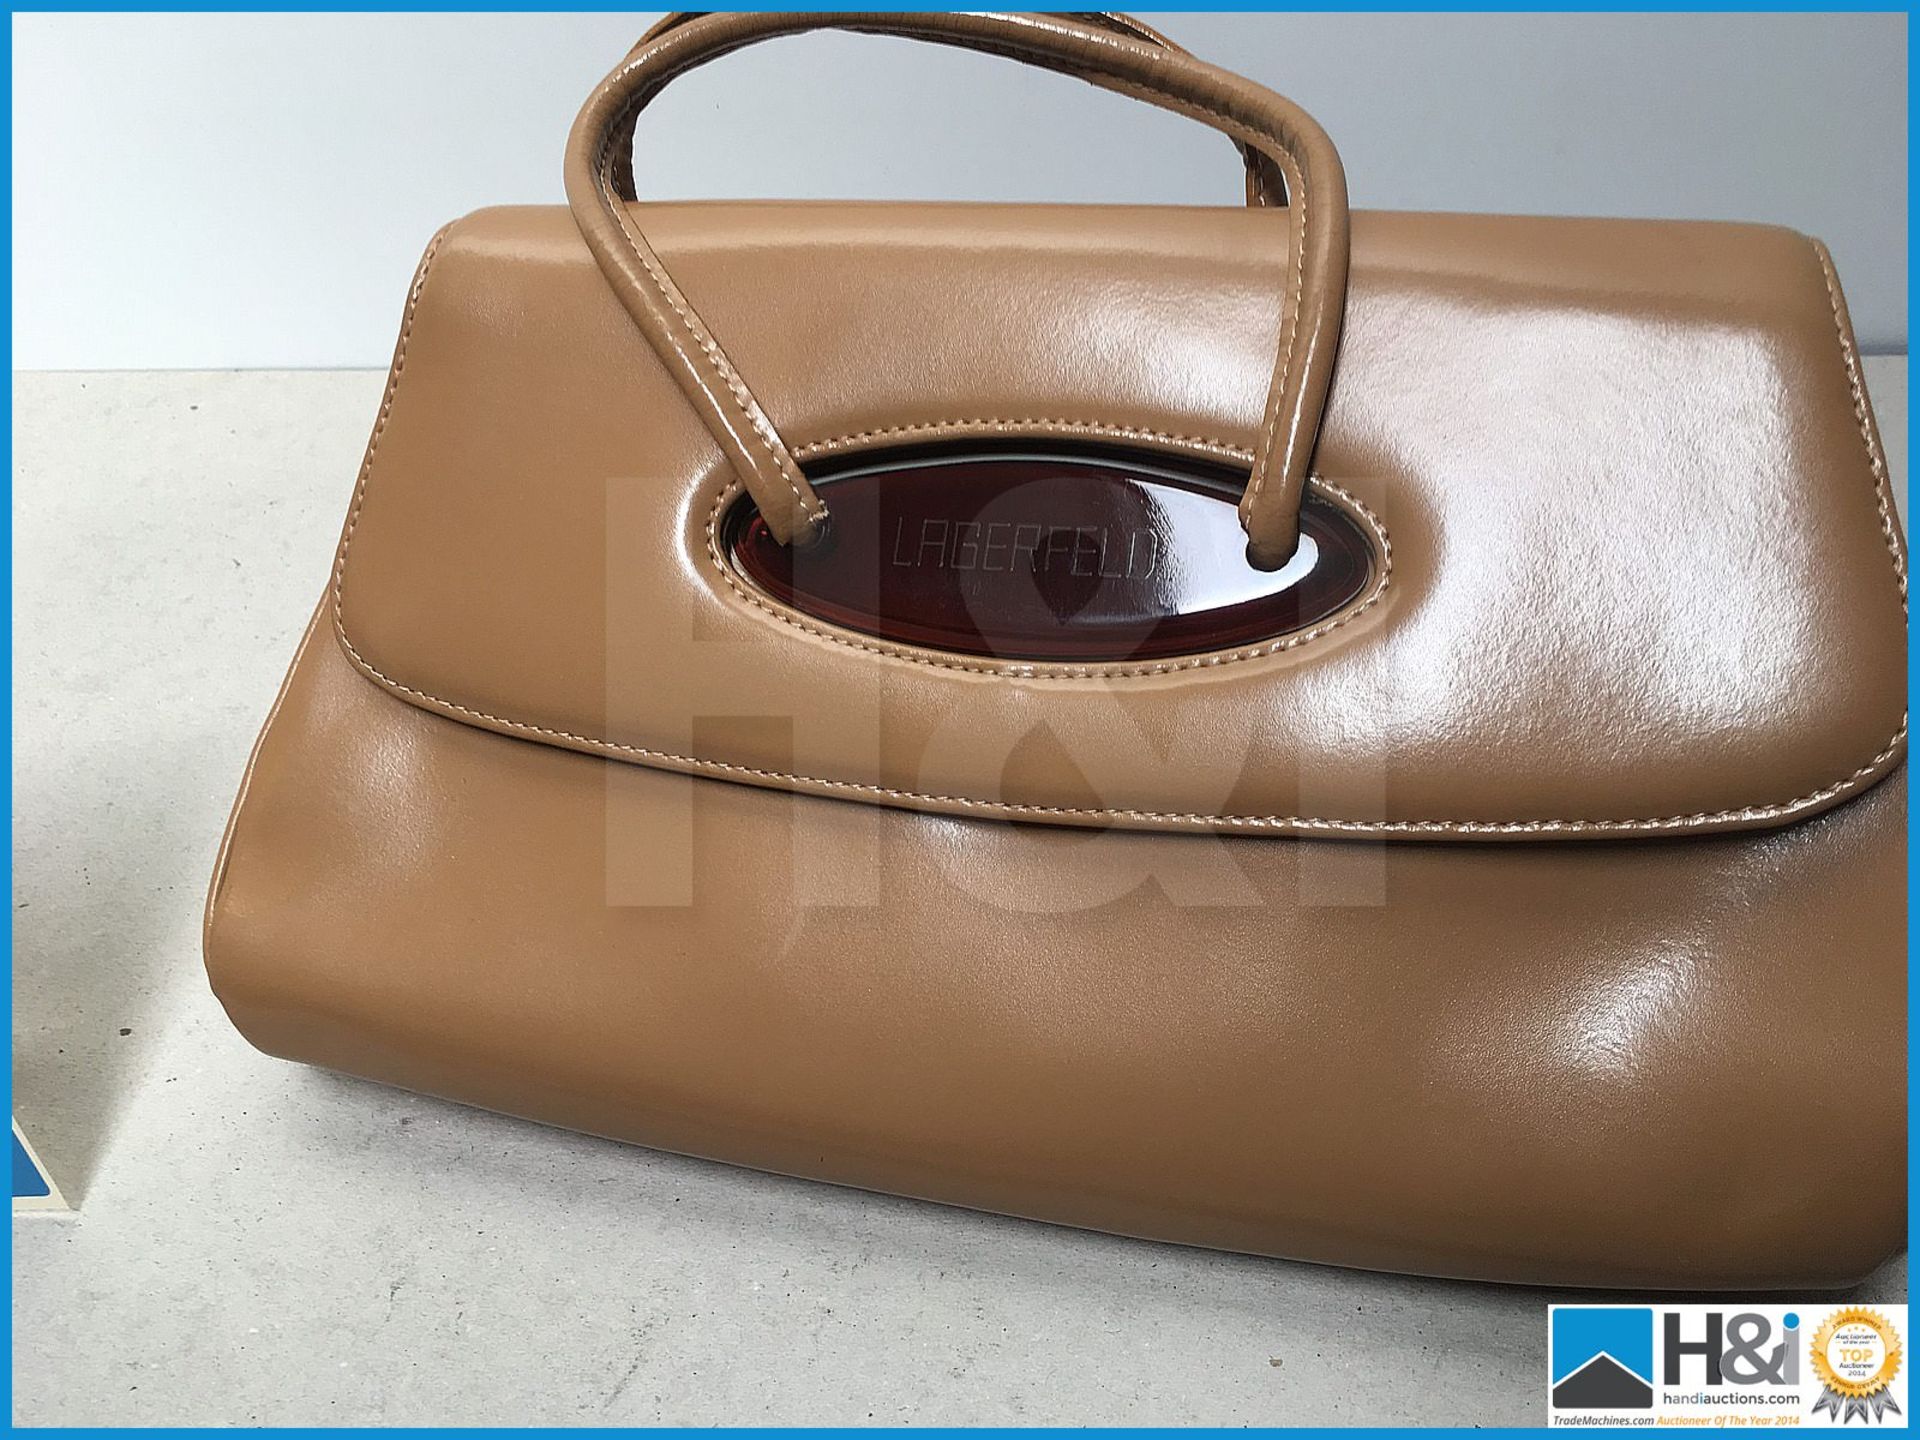 Genuine Karl Largerfeld handbag with original tie bag in excellent condition. - Image 2 of 5